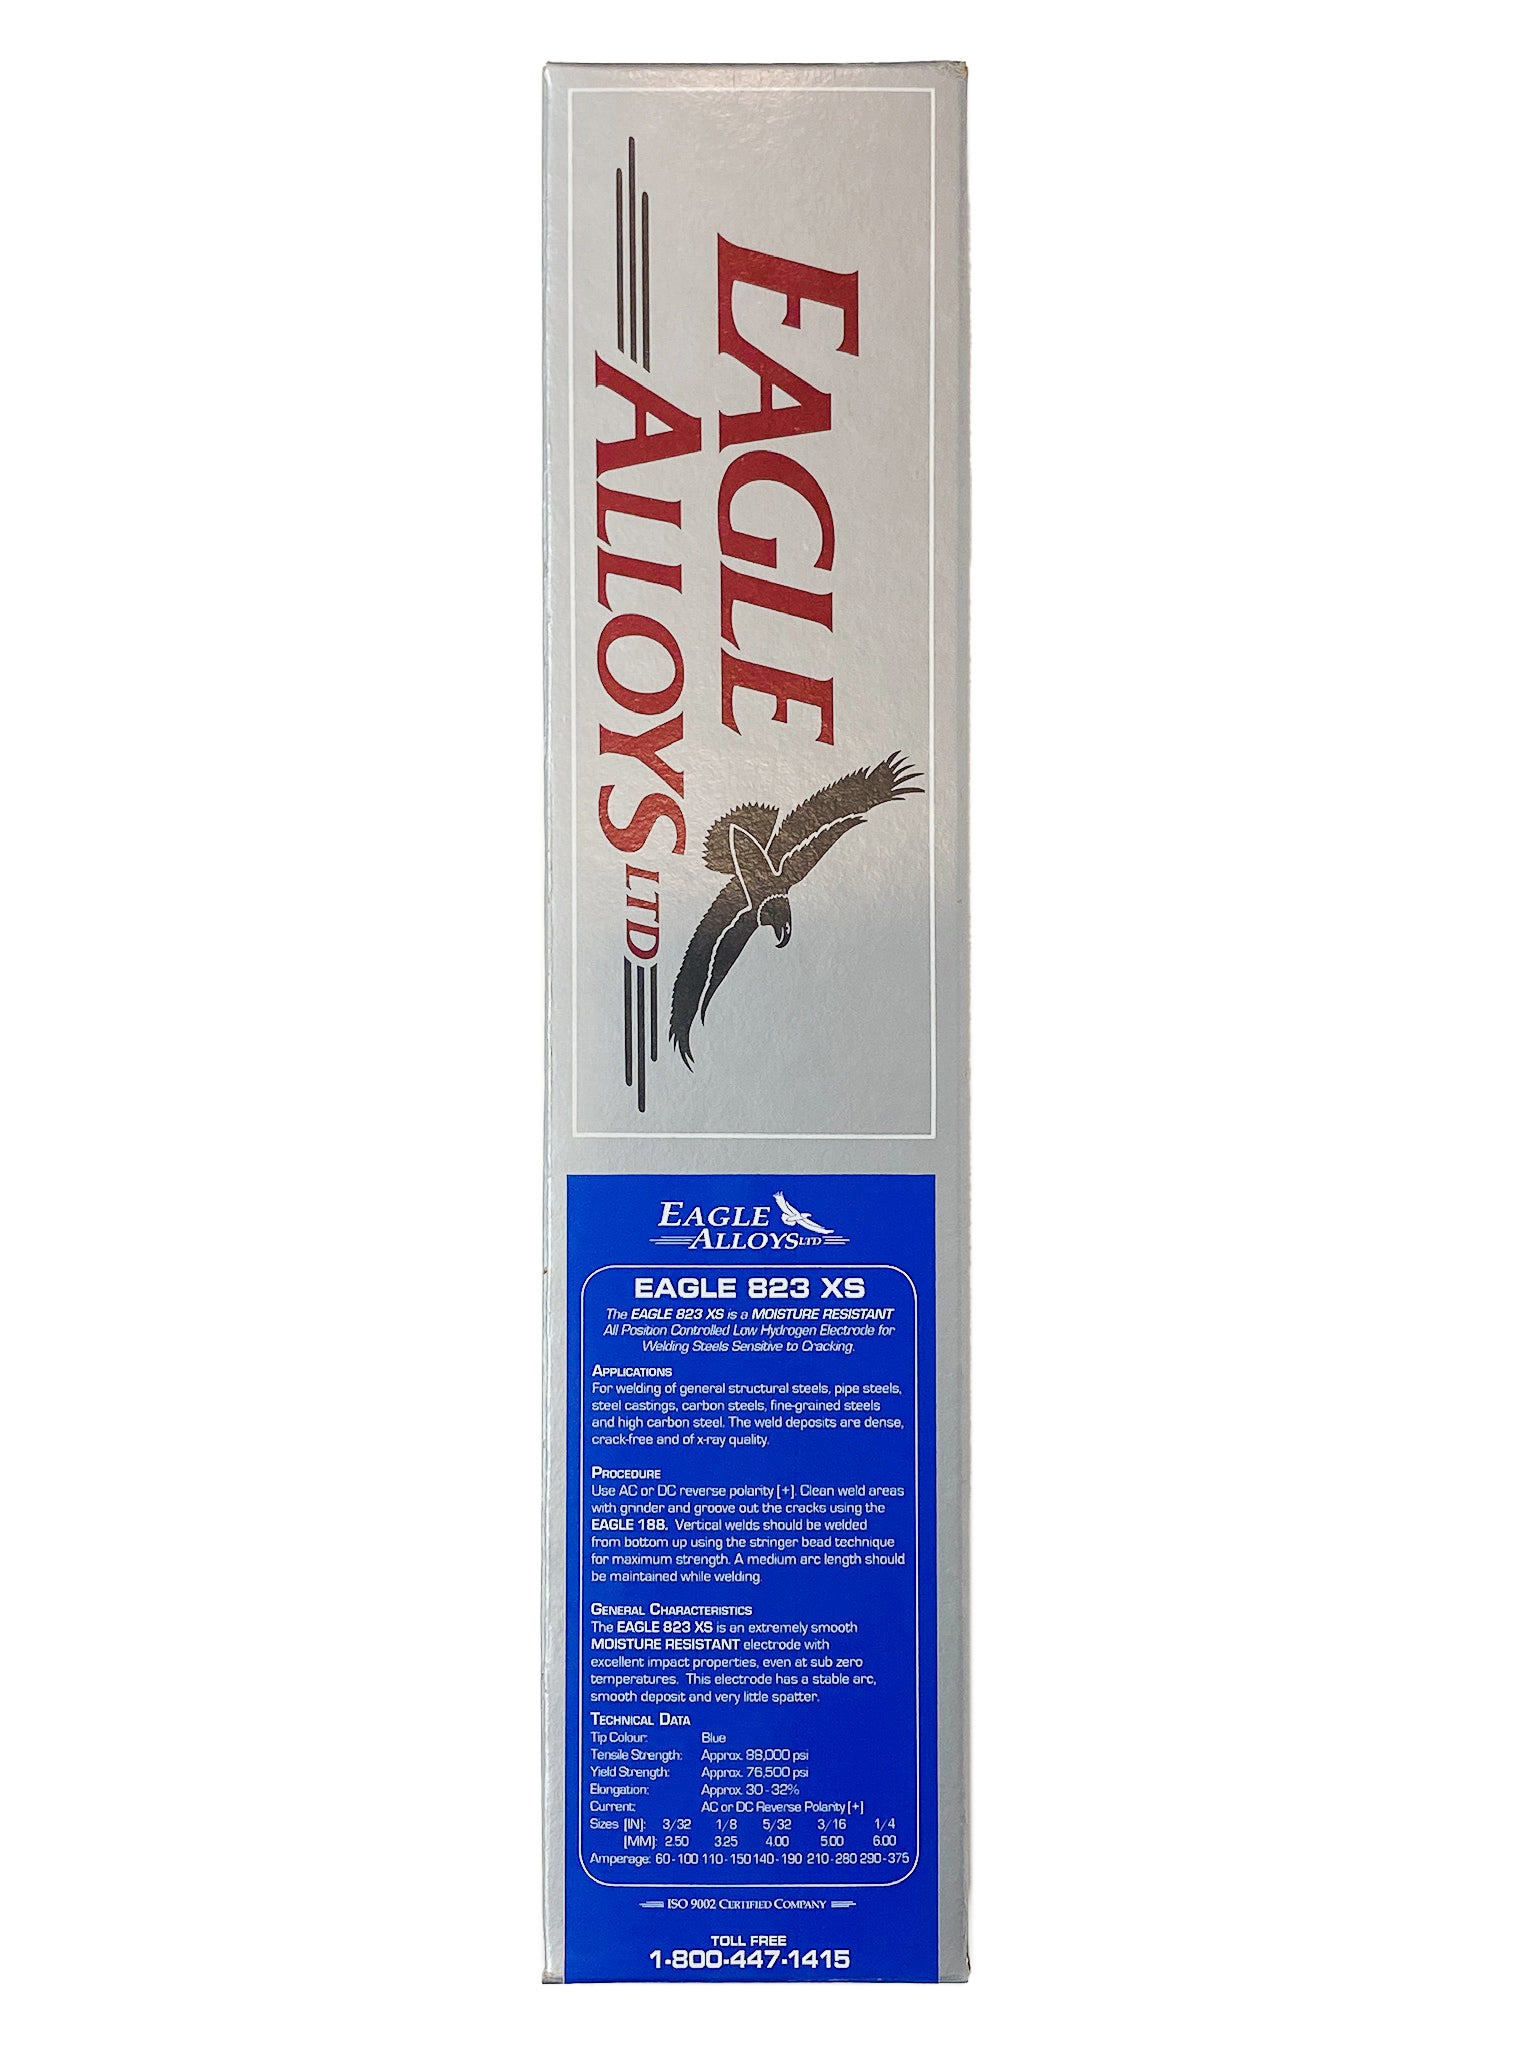 EAGLE 823 XS: Moisture-Resistant Low Hydrogen Electrode – Eagle